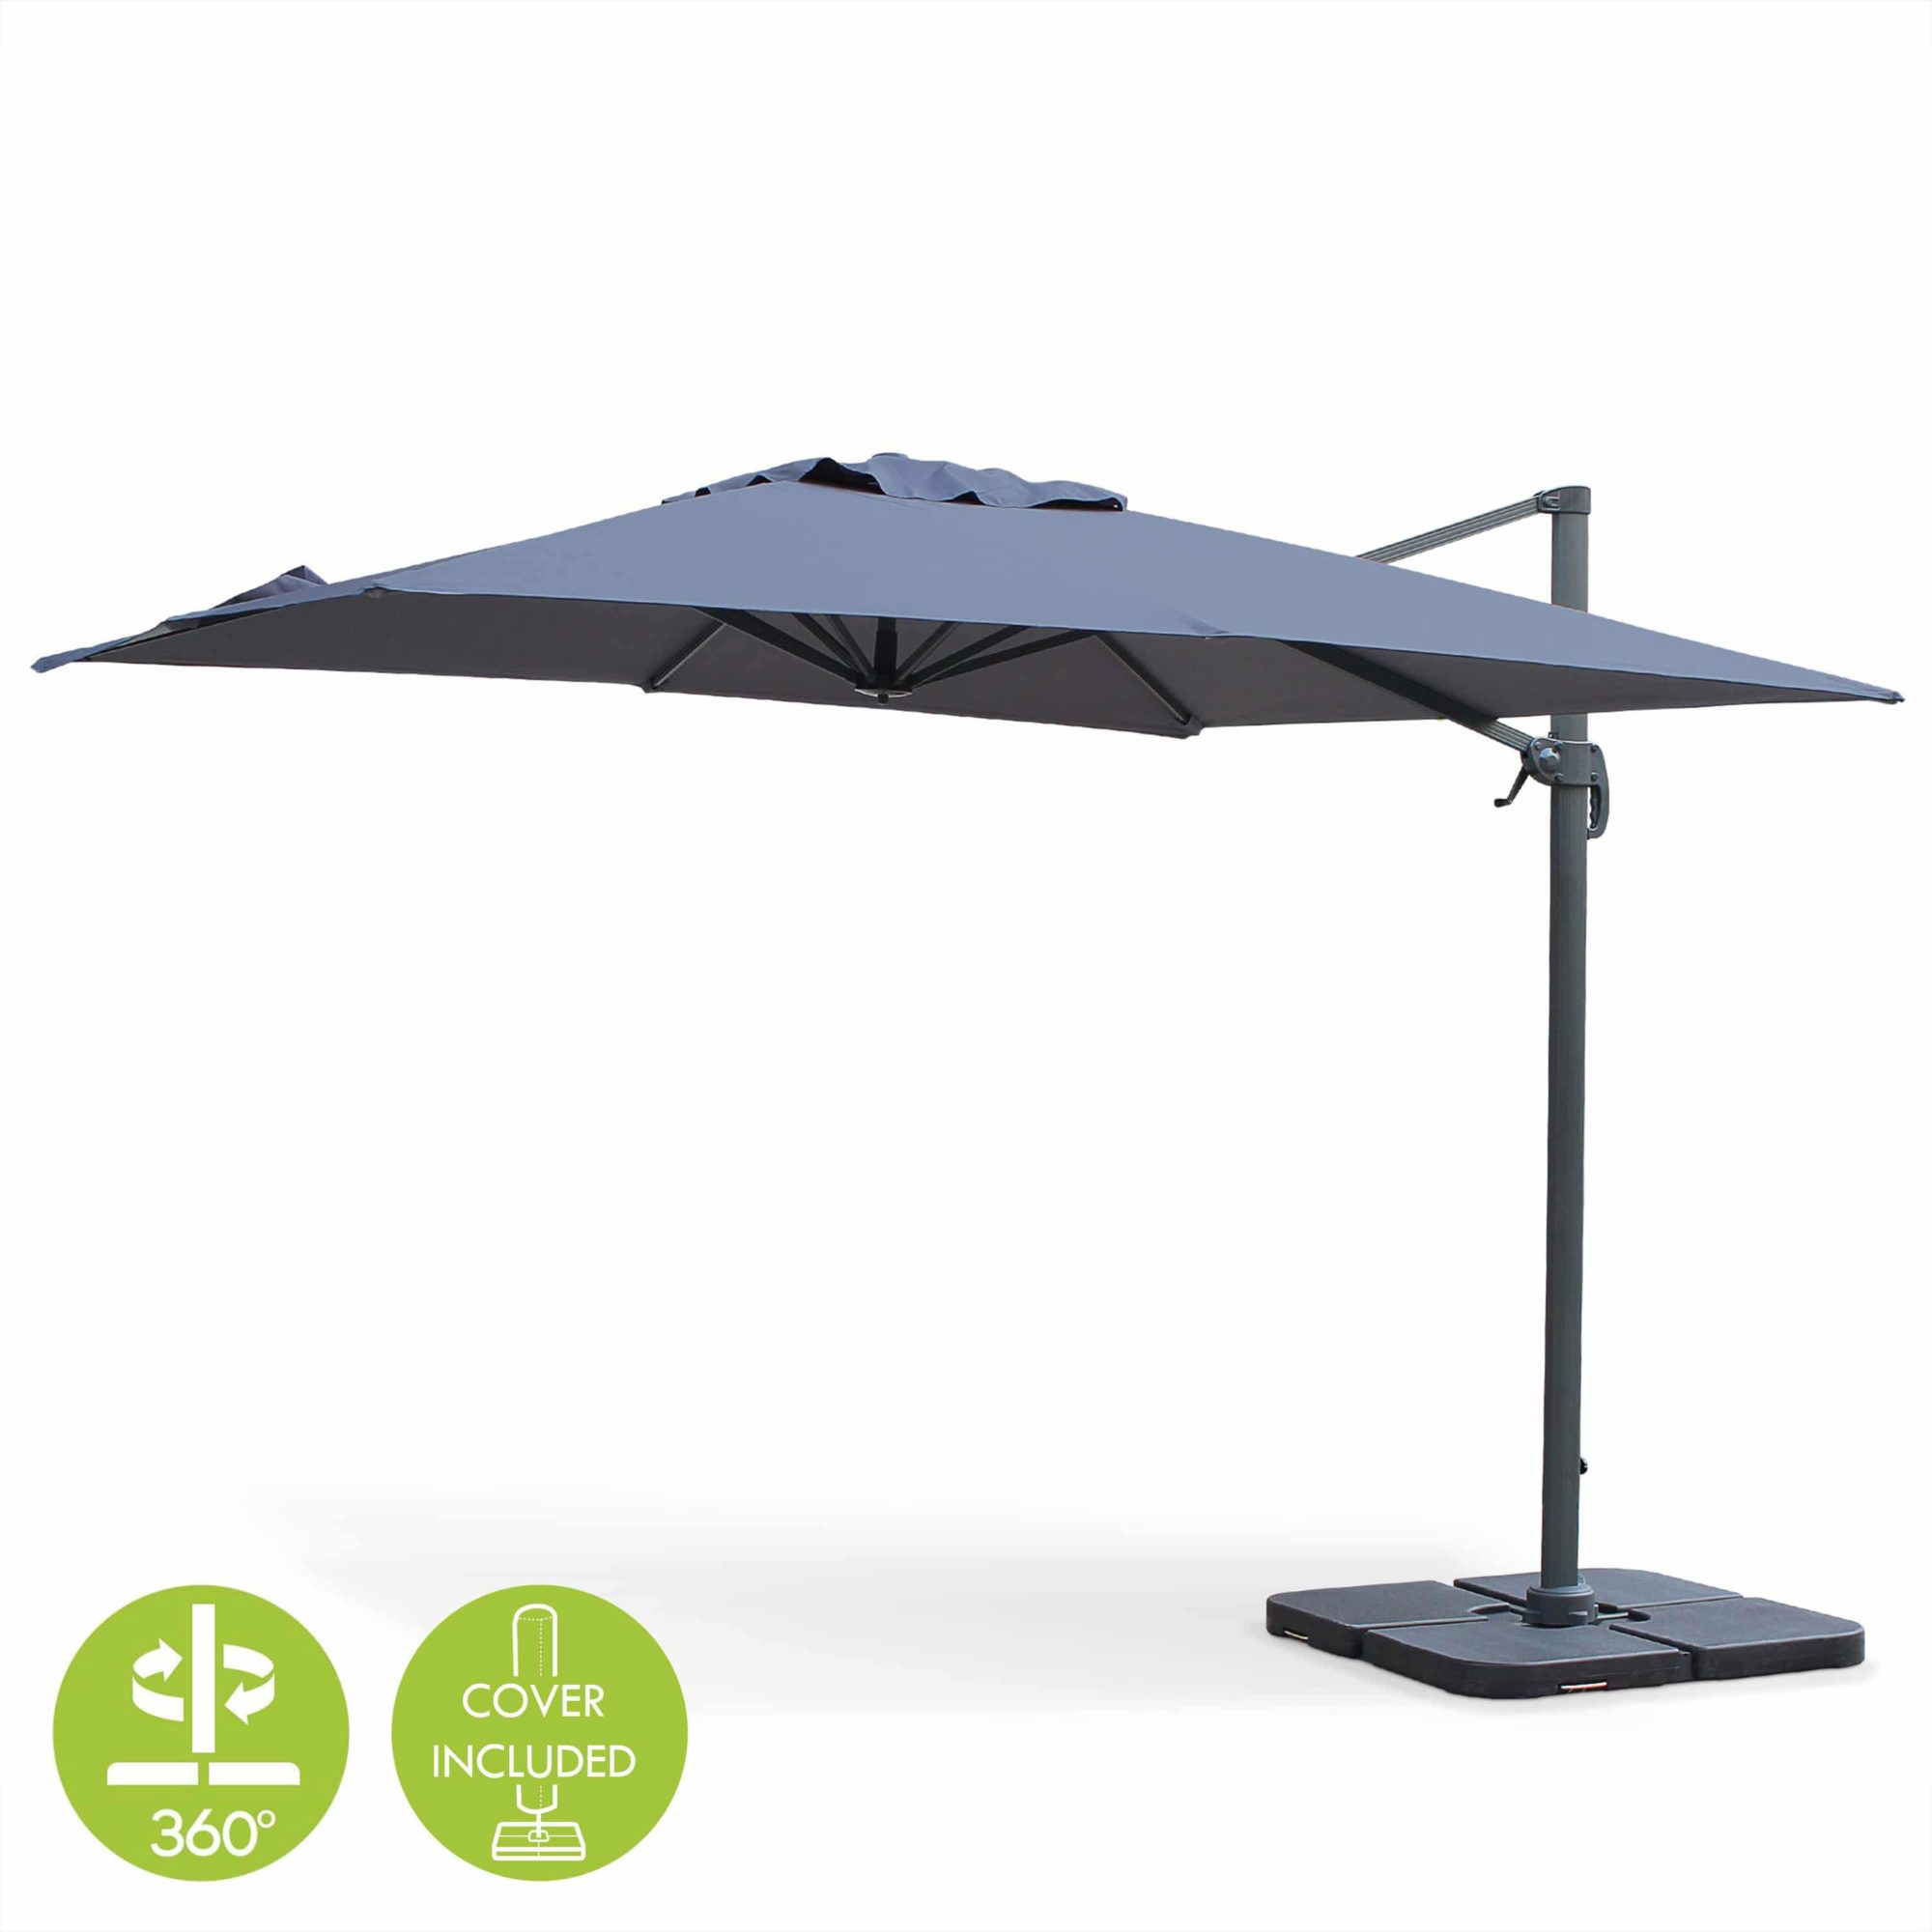 Cantilever outdoor umbrella aluminium grey